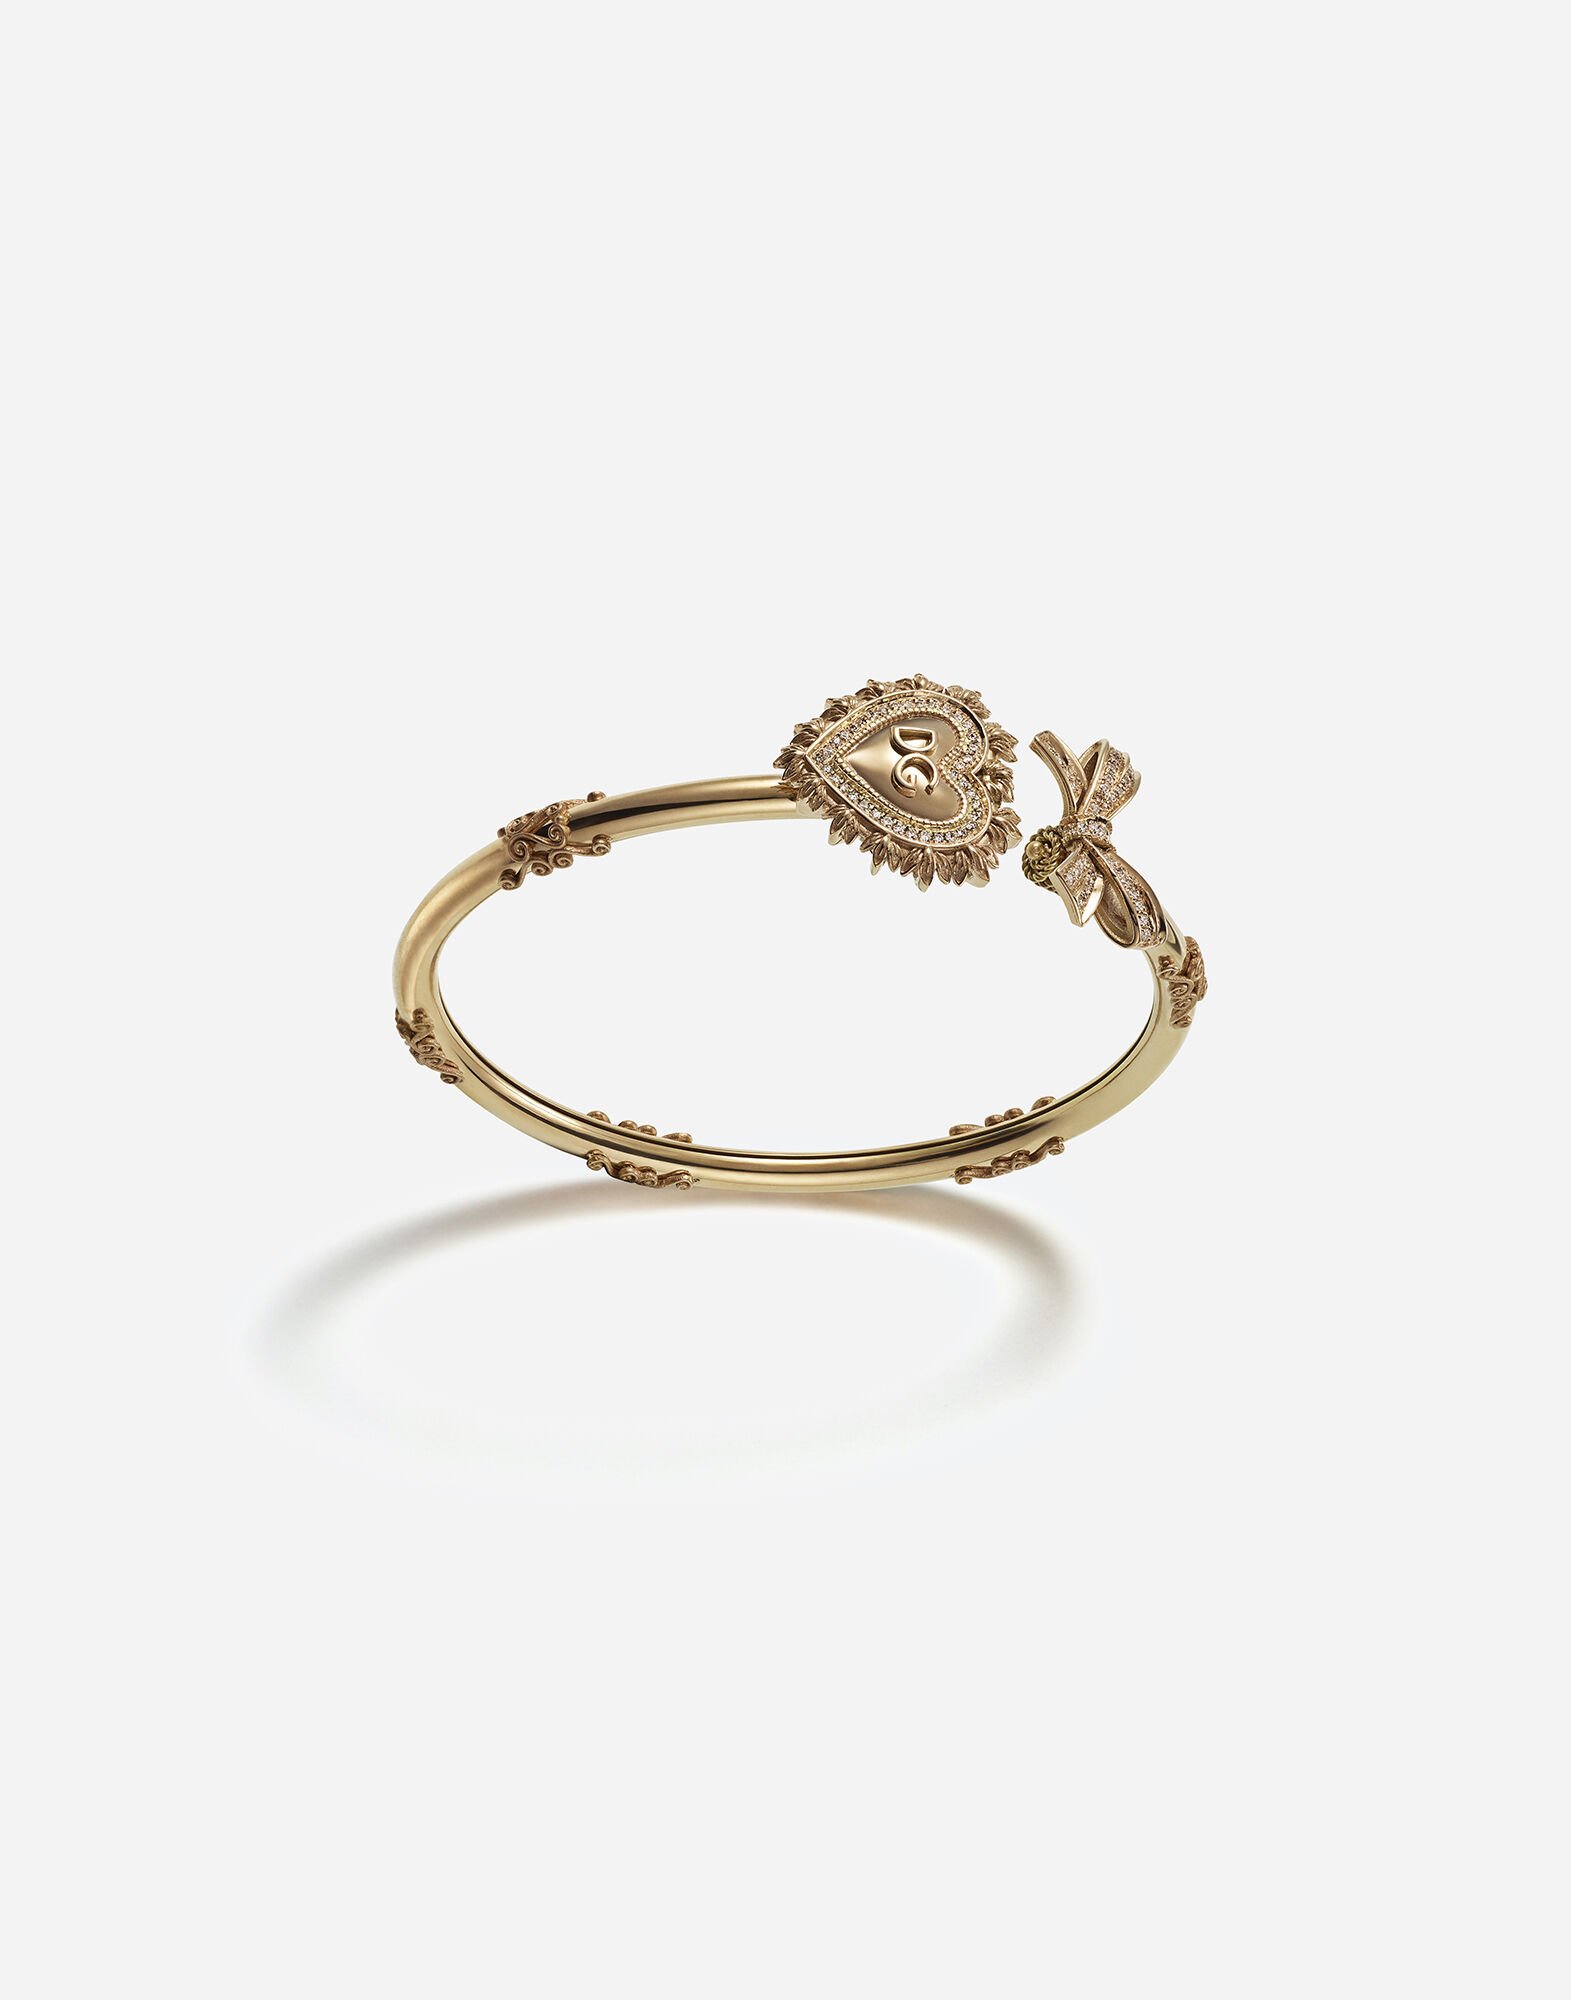 Dolce & Gabbana Devotion bracelet in yellow gold with diamonds Gold BB6711A1016